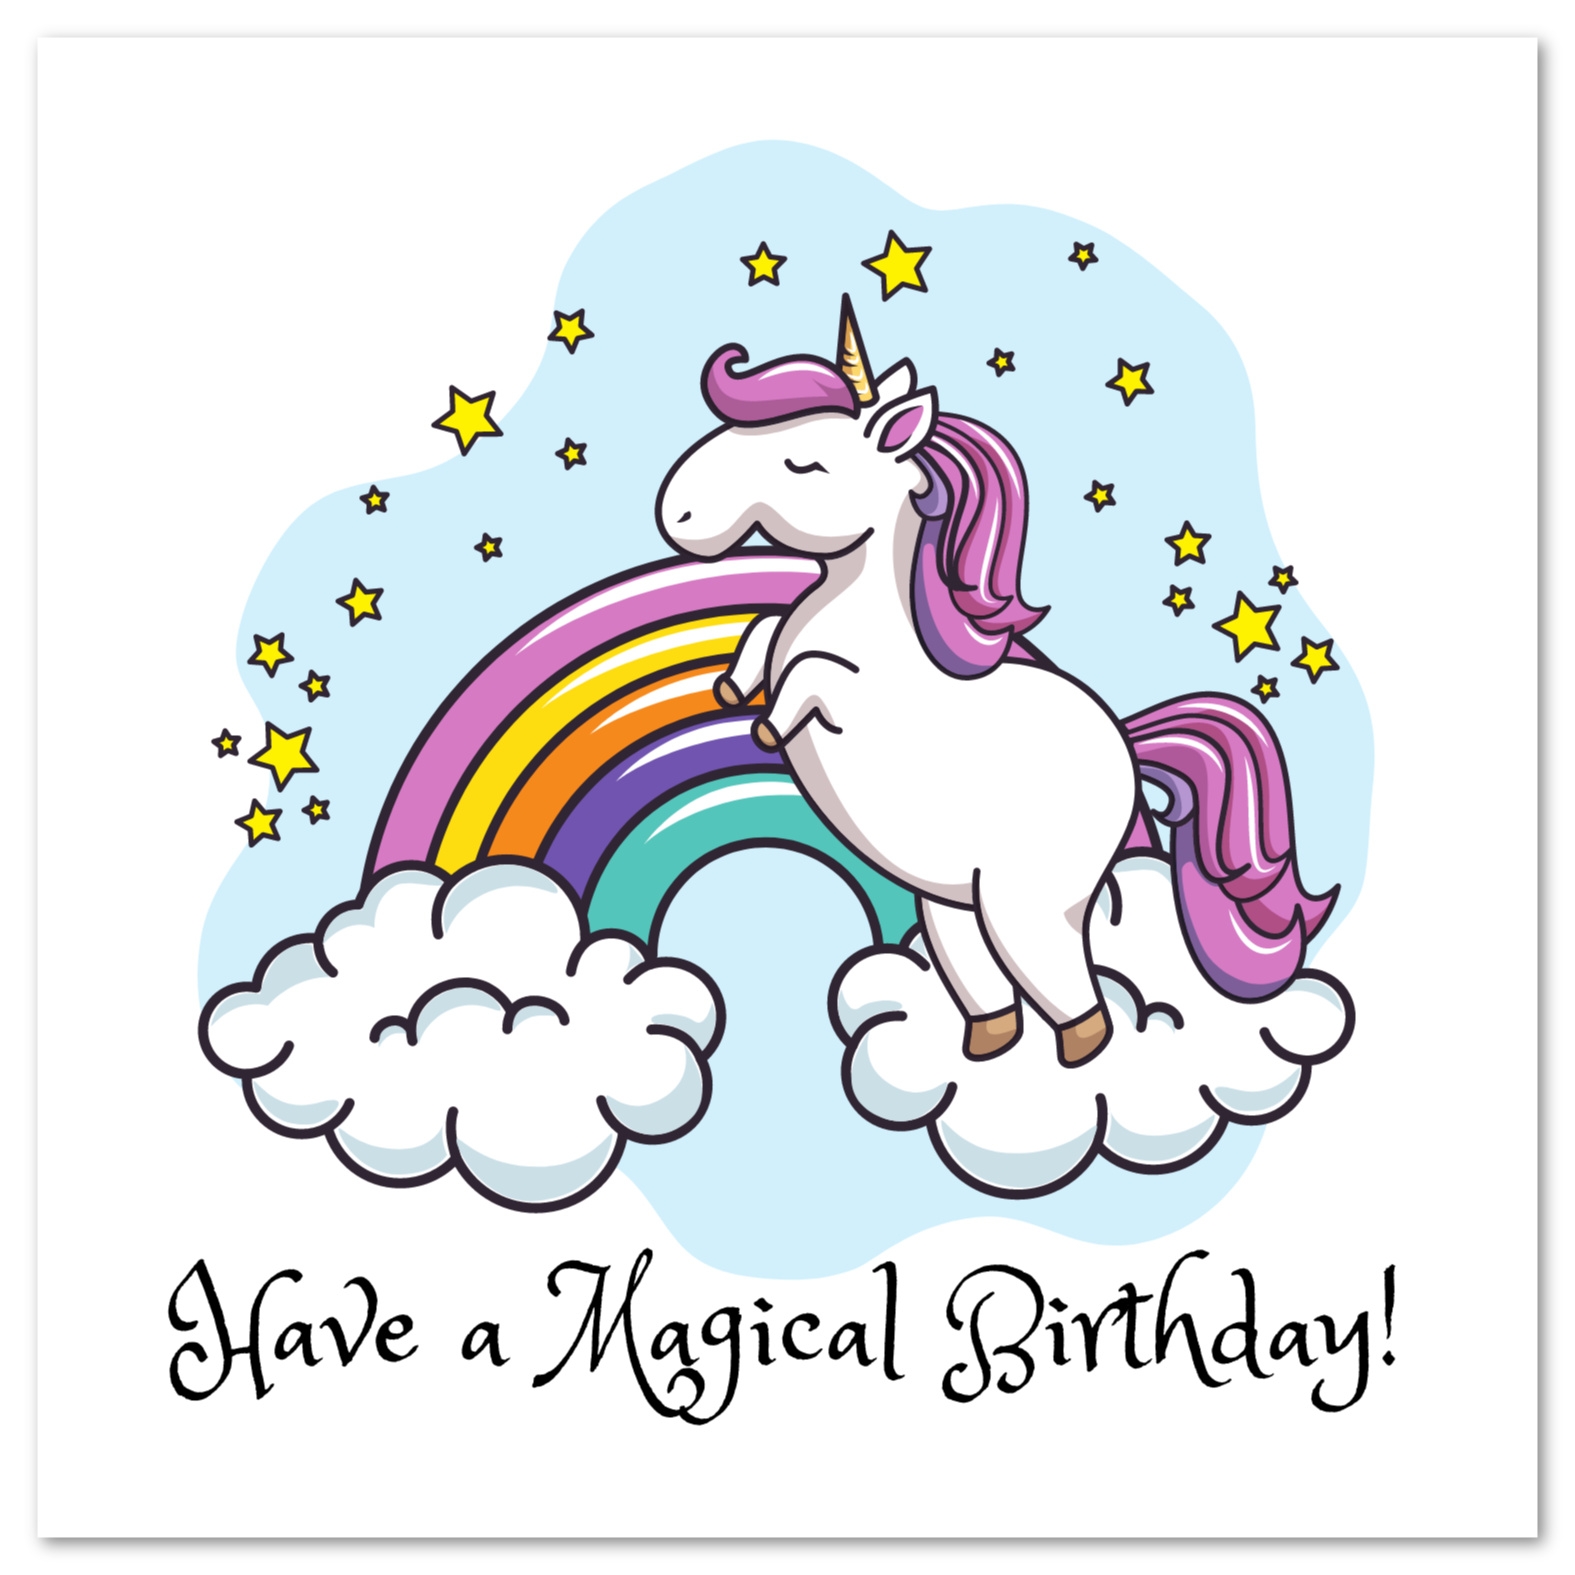 Free Printable Birthday Cards - Free Printable Birthday Cards For Kids